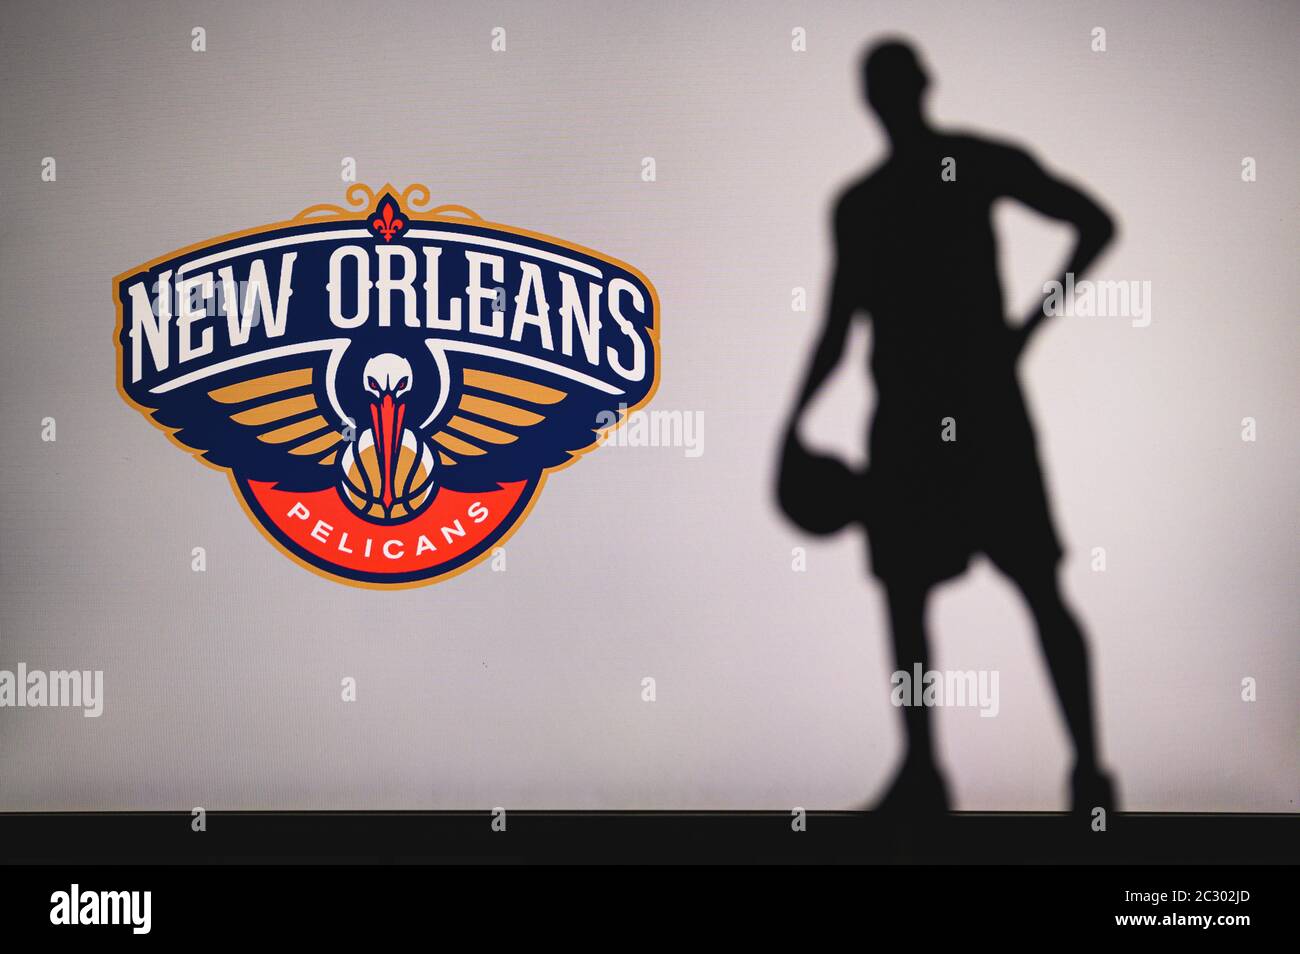 NEW YORK, USA, JUN 18, 2020: New Orleans Pelicans basketball club